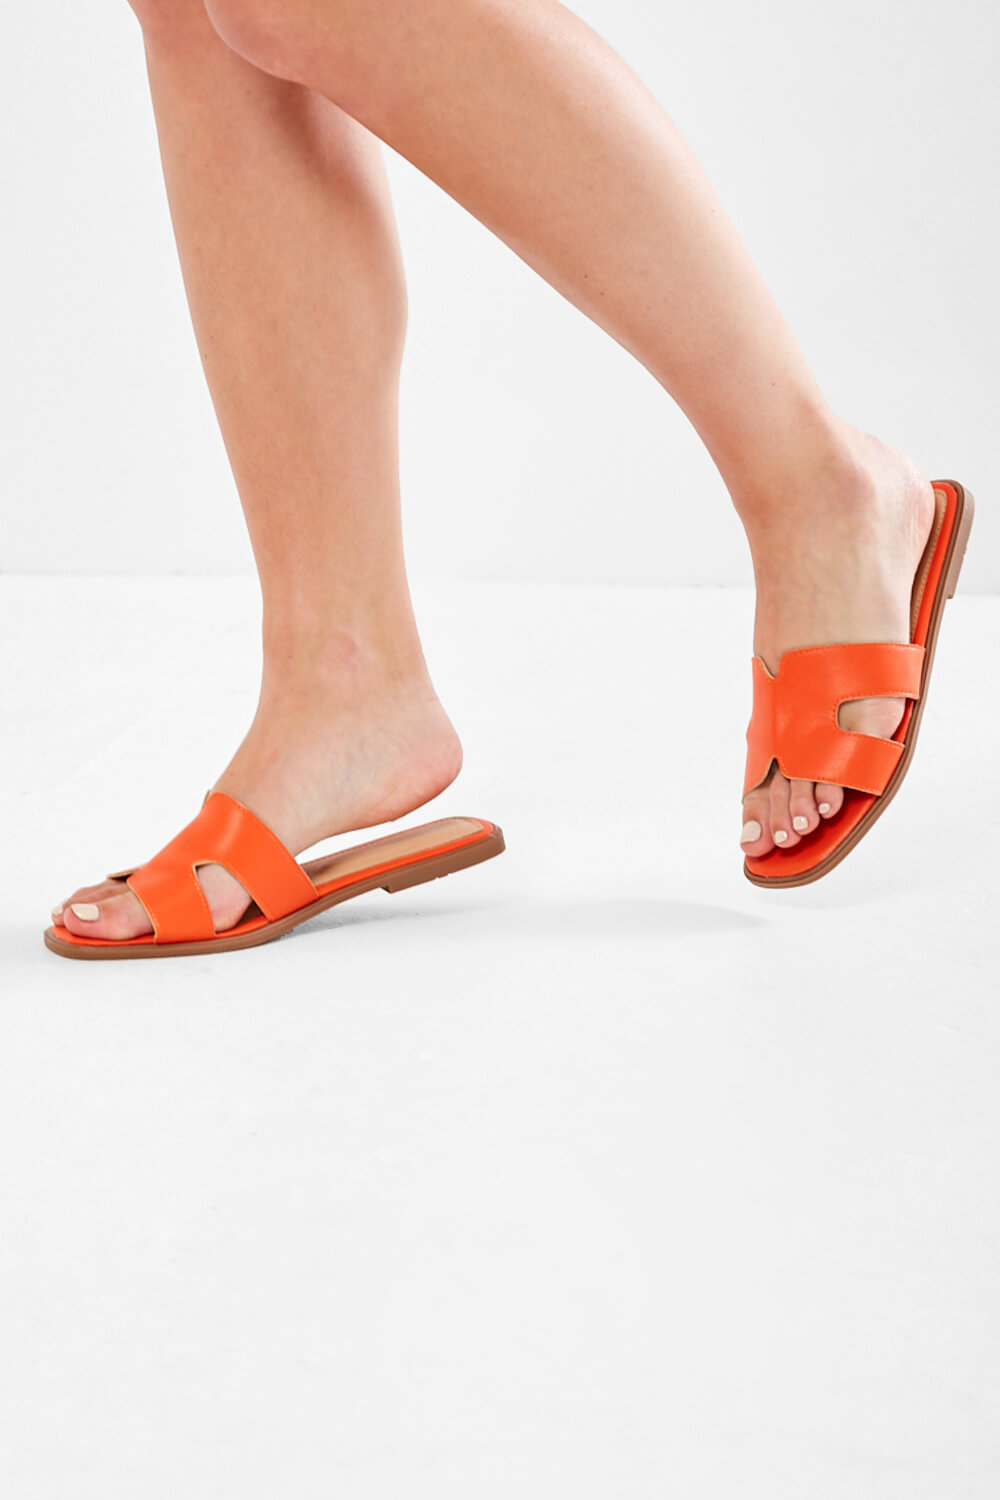 No Doubt Lolly Slider Sandal in Orange | iCLOTHING - iCLOTHING